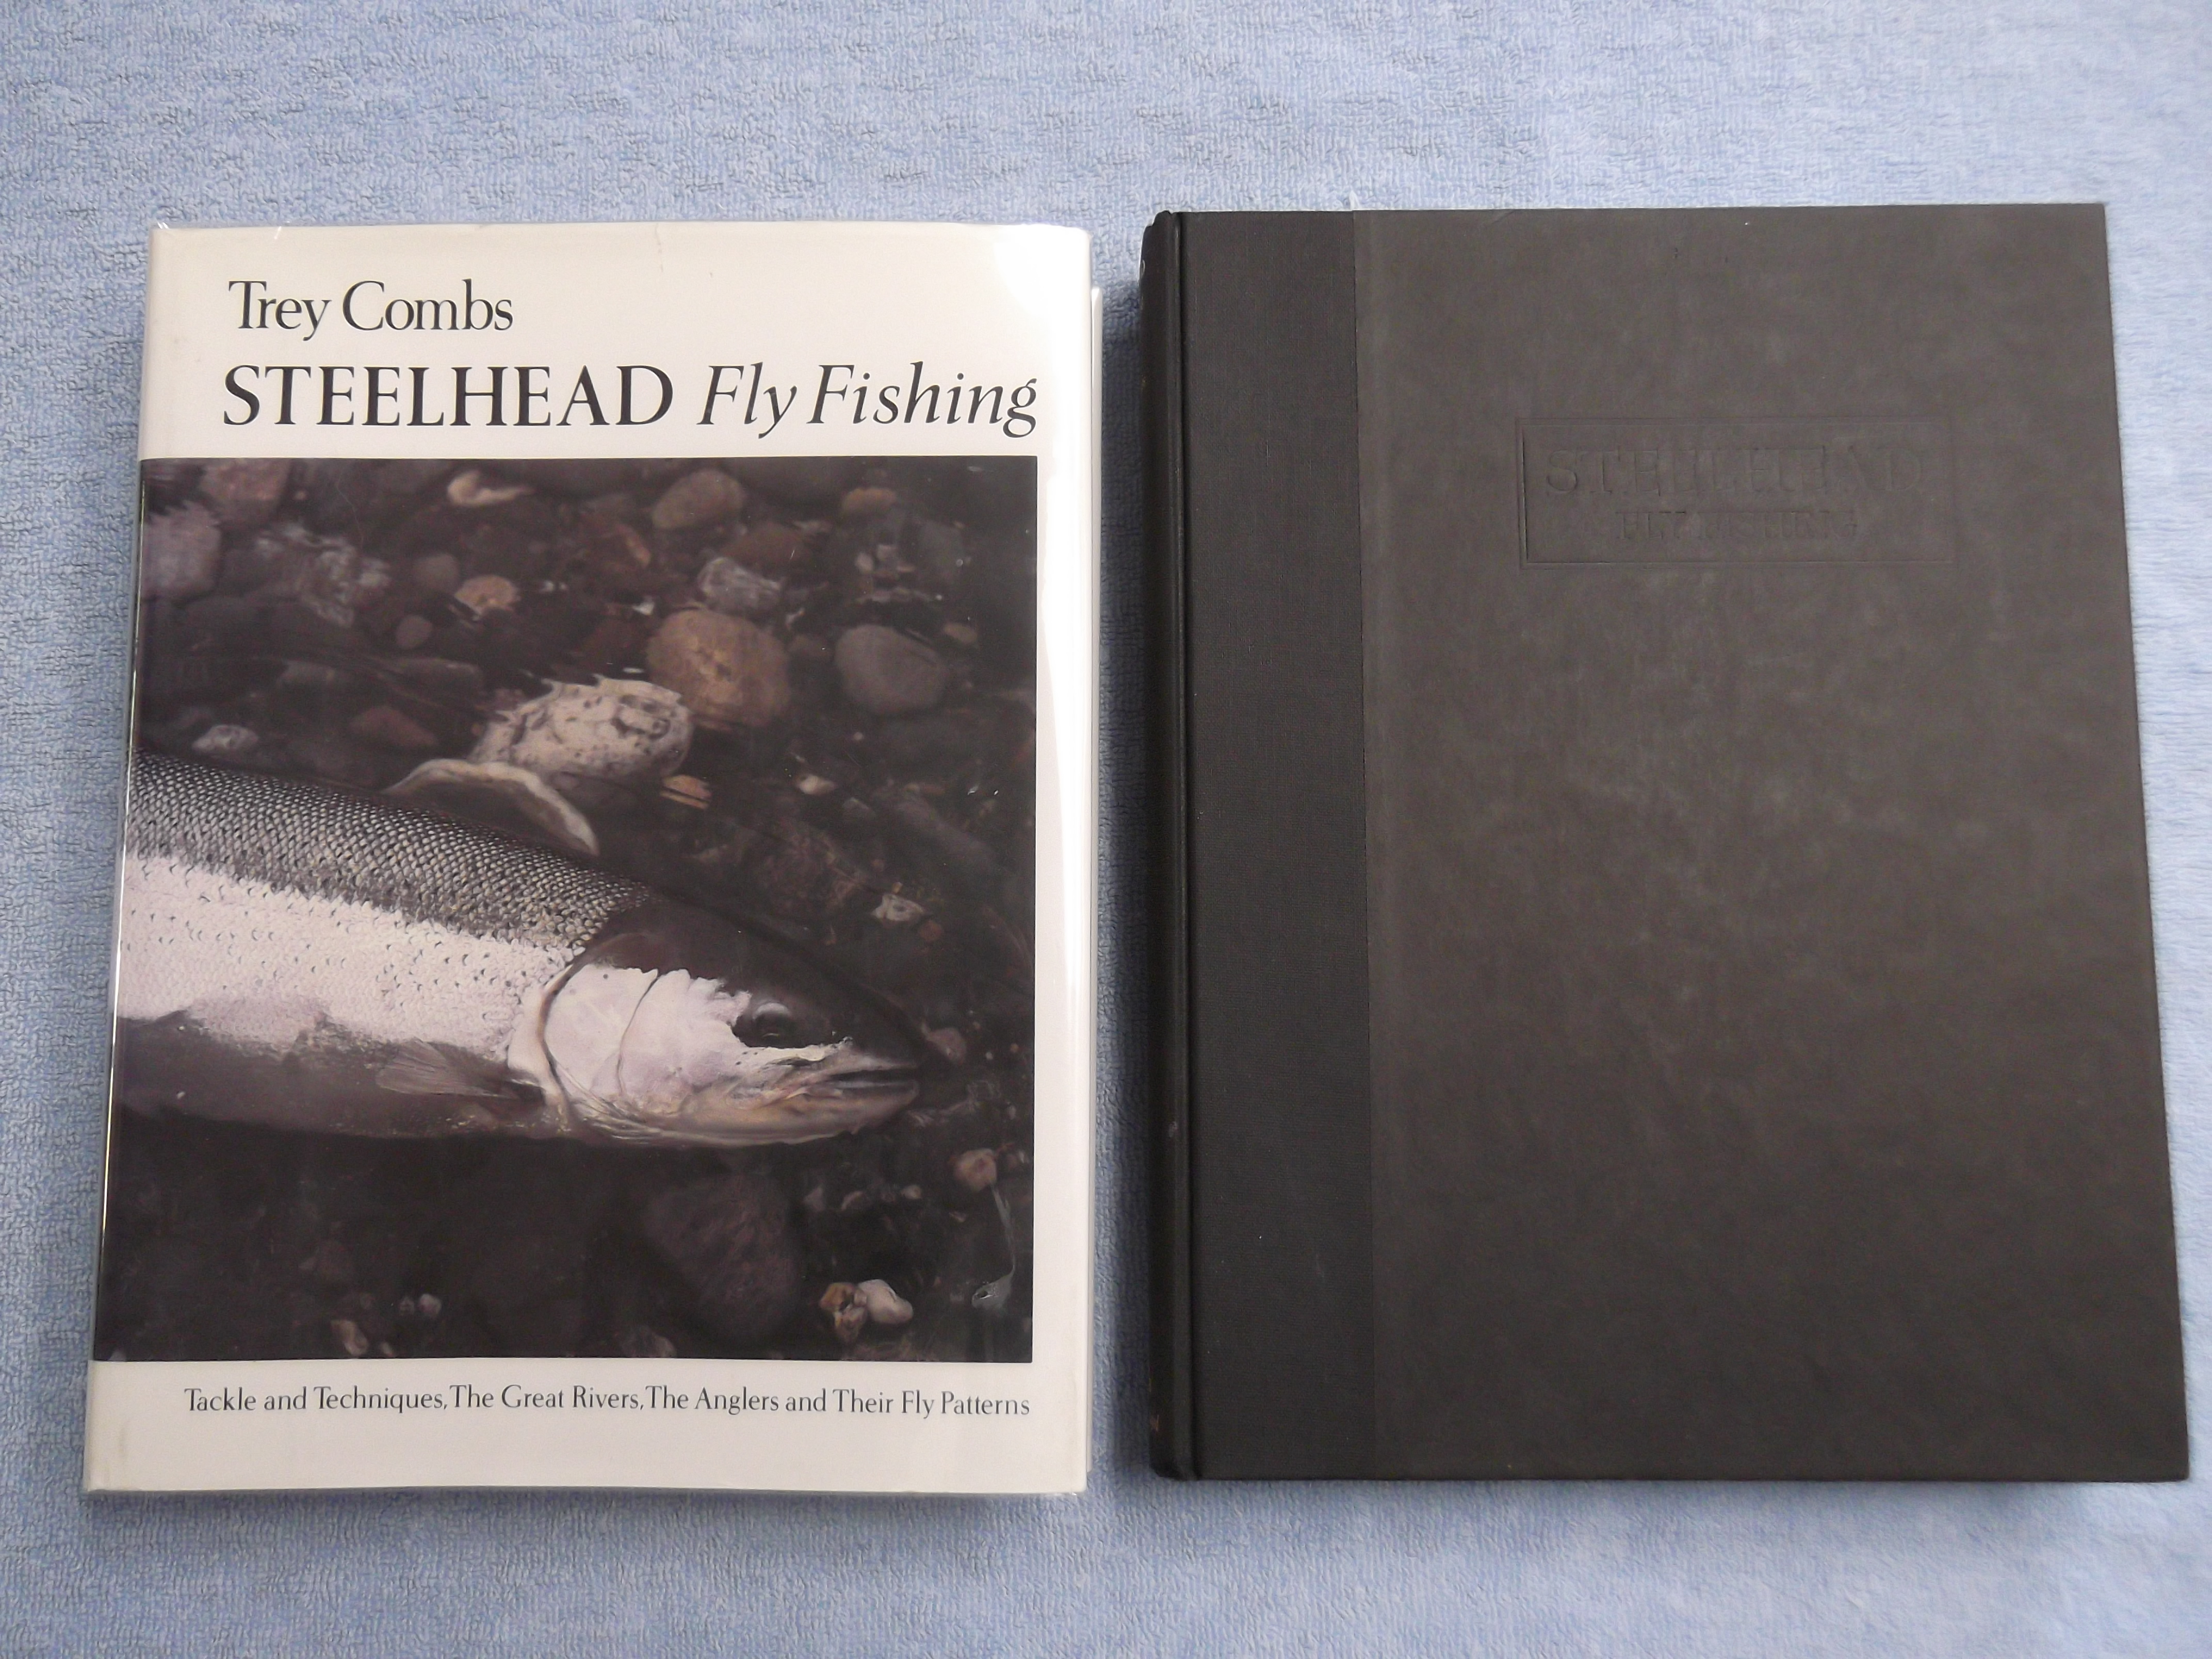 Steelhead Fly Fishing. by Trey Combs.